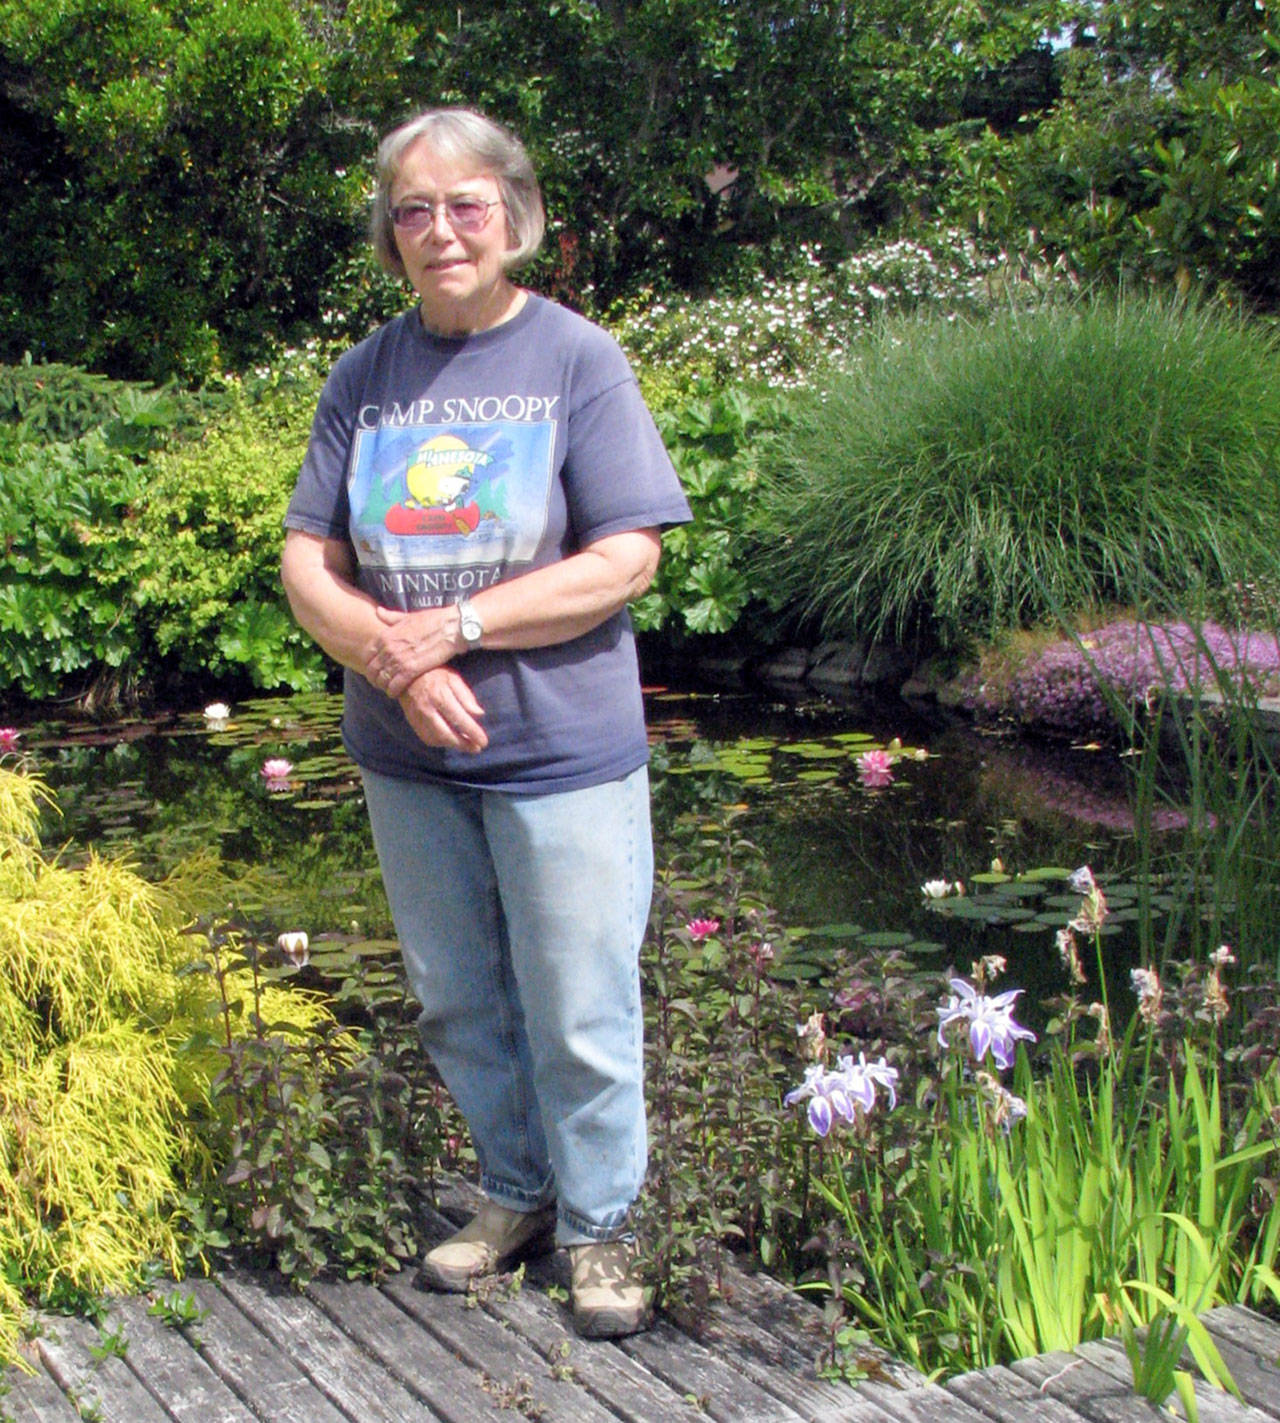 Water Features Ponds Focus Of Garden Talk Peninsula Daily News